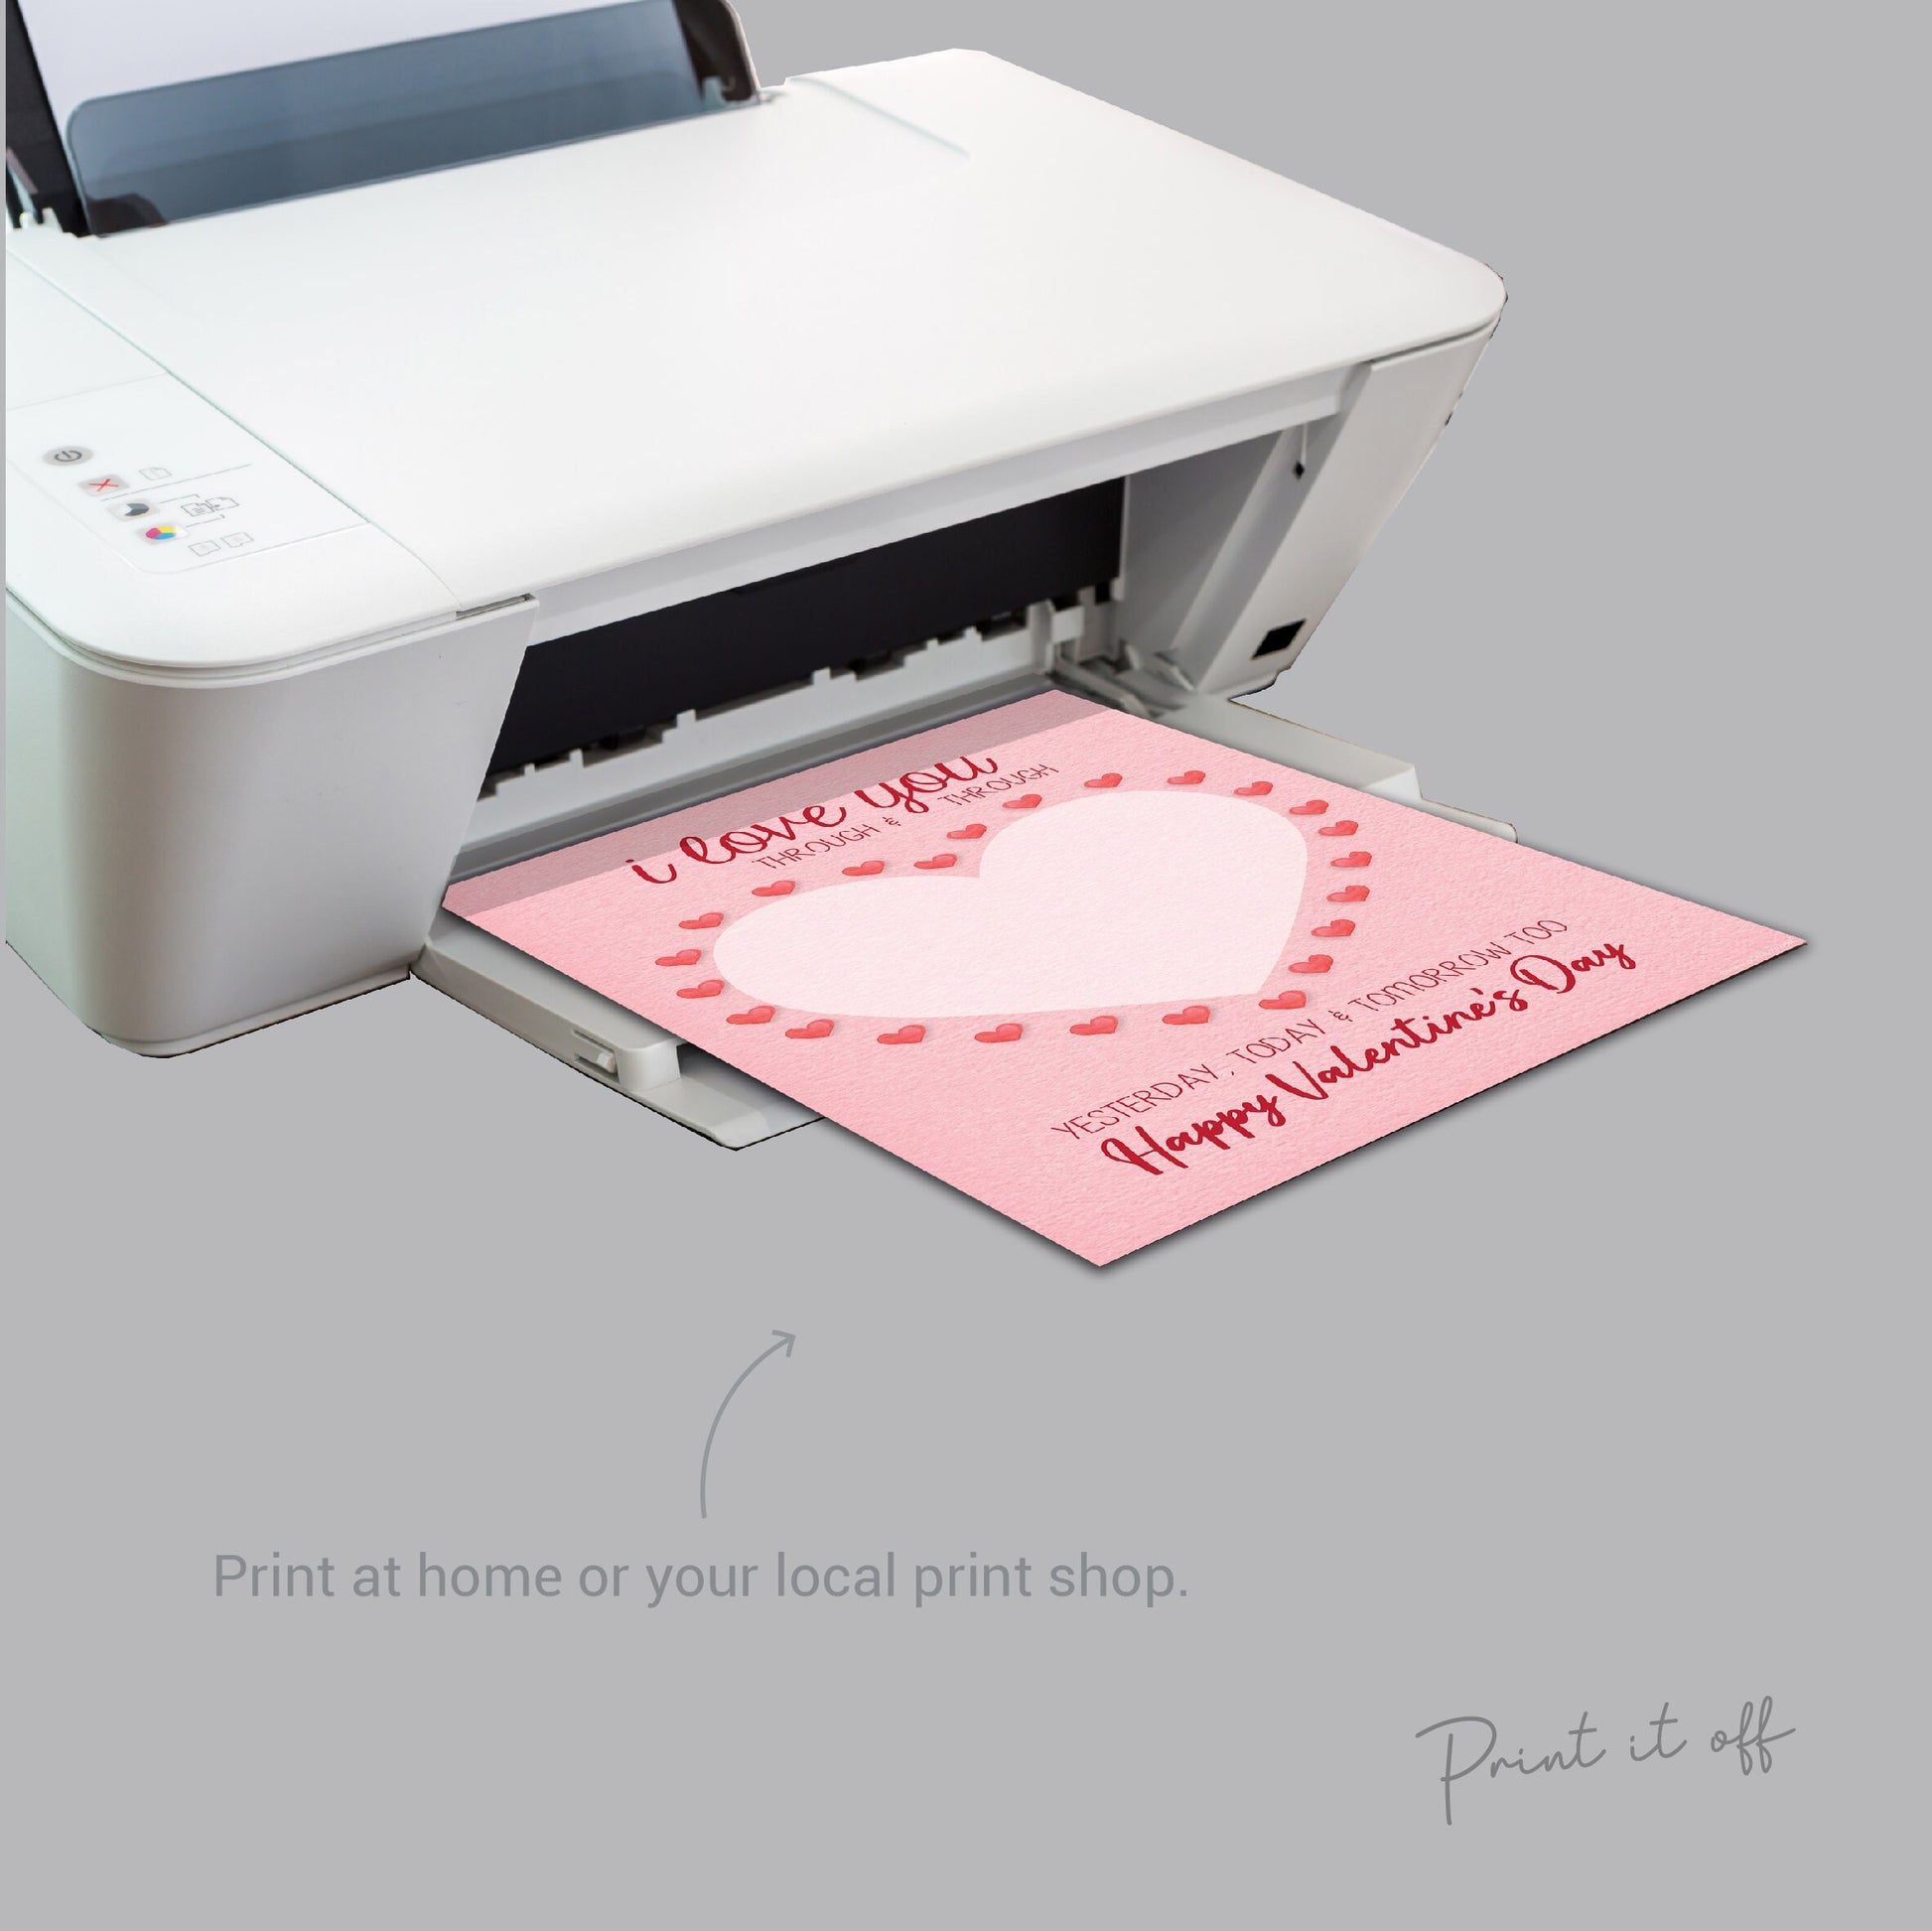 I Love You Through & Through / Handprint Footprint Heart / Valentine's Poem Card DIY Craft Art / Baby Kids Toddler / Print It Off 0145